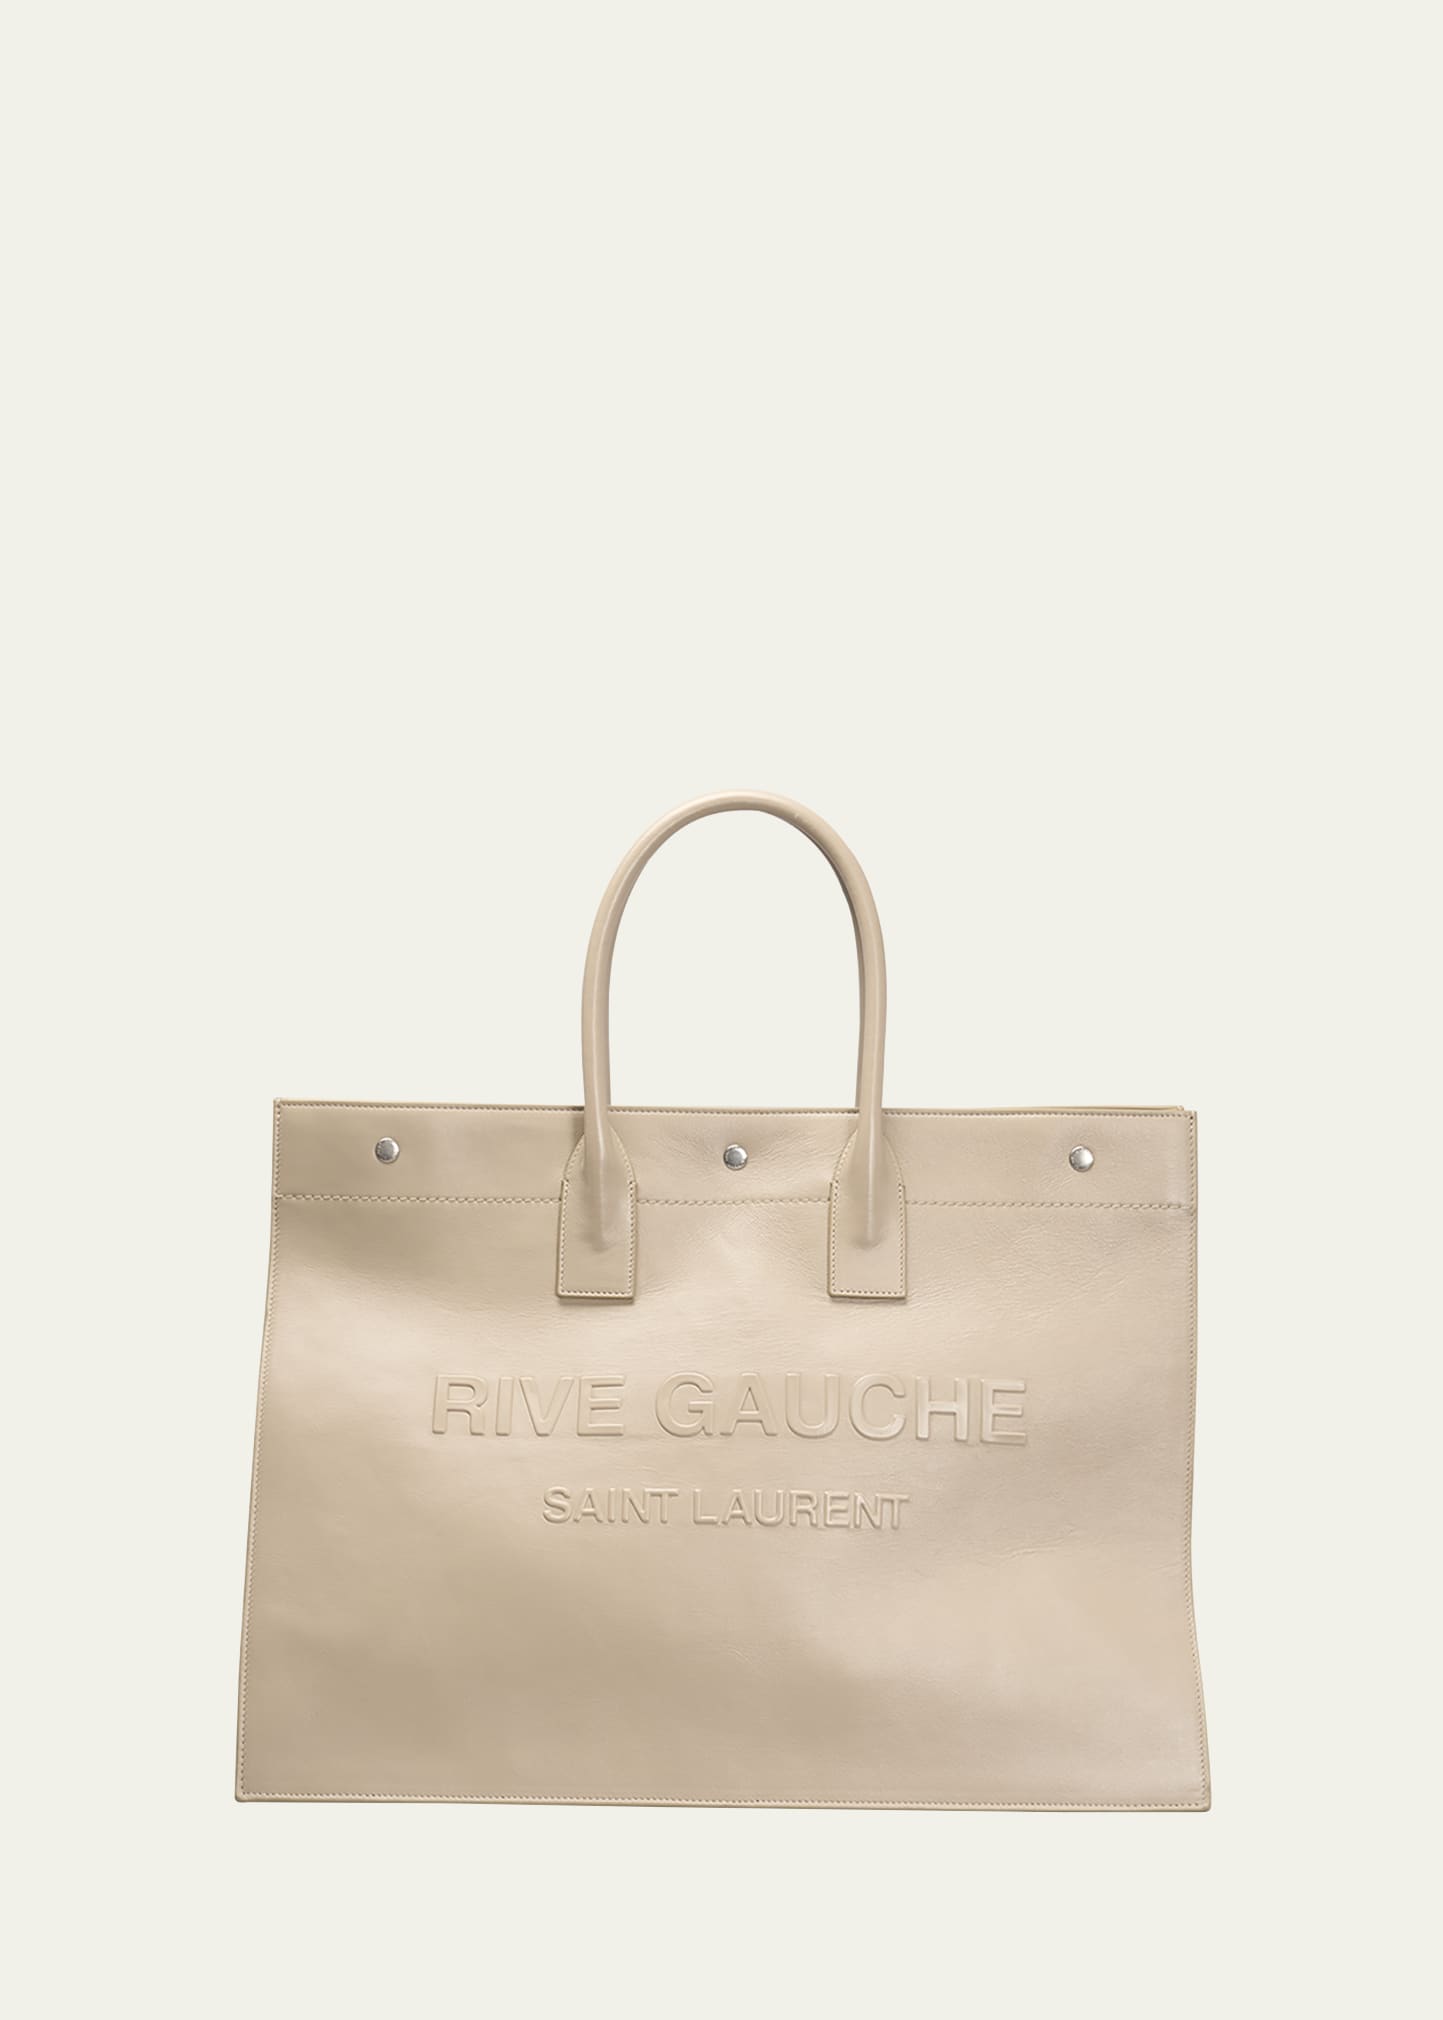 Saint Laurent Men's Rive Gauche Leather Tote Bag In Sea Salt